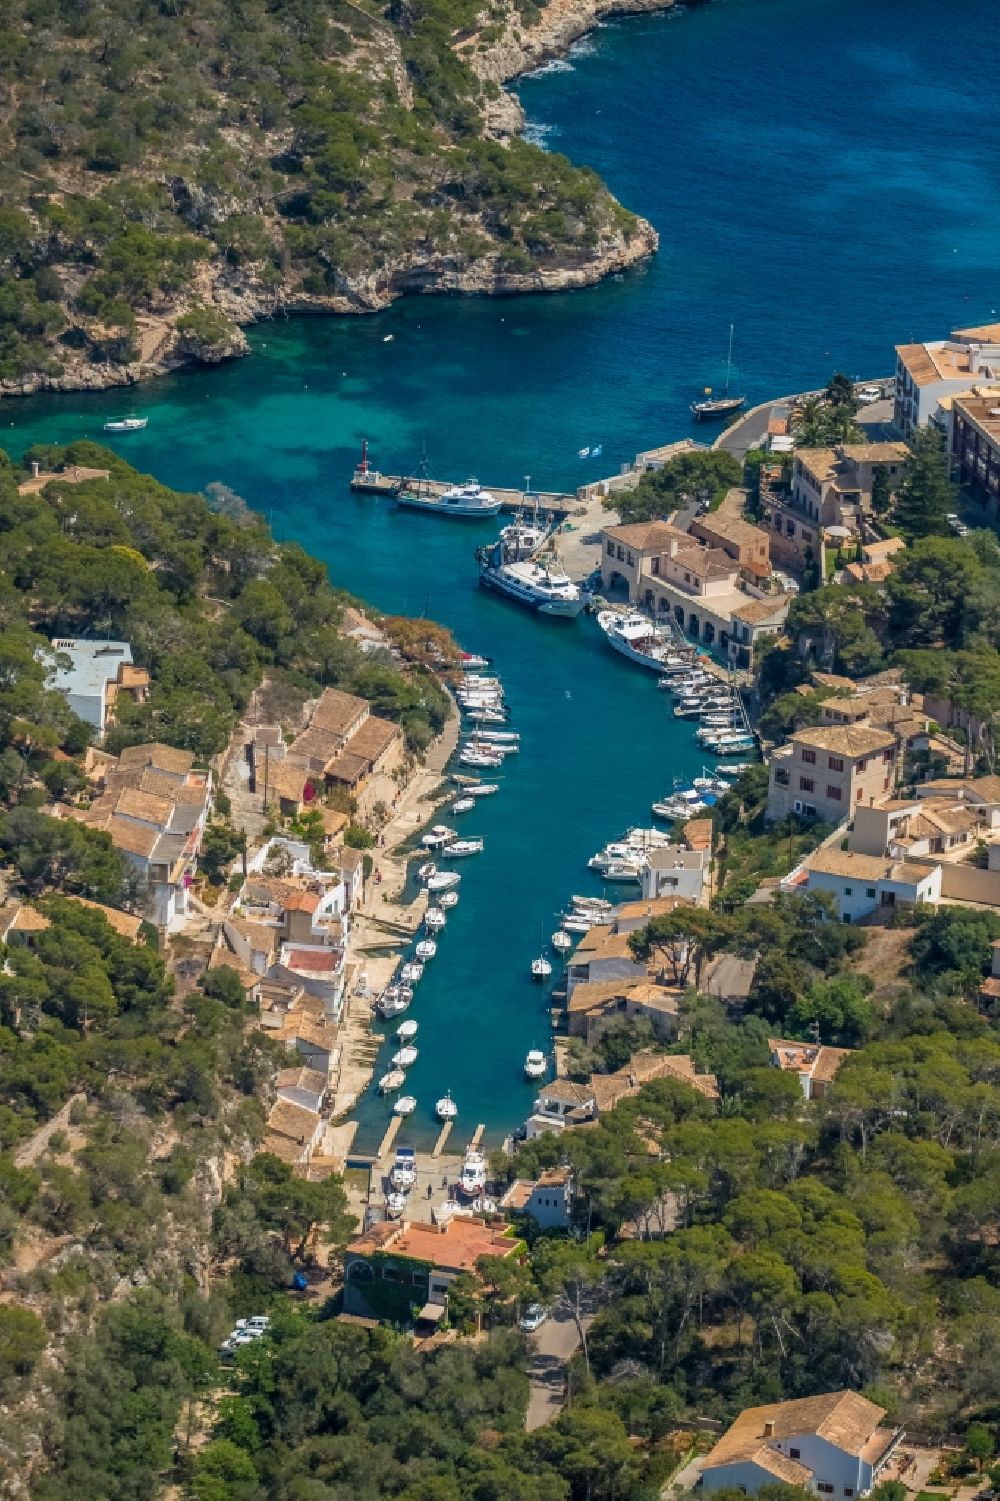 Luftbild Cala Figuera - Yachthafen am Uferbereich vom Port de Cala Figuera und Calo d'en Busques in Cala Figuera in Balearische Insel Mallorca, Spanien